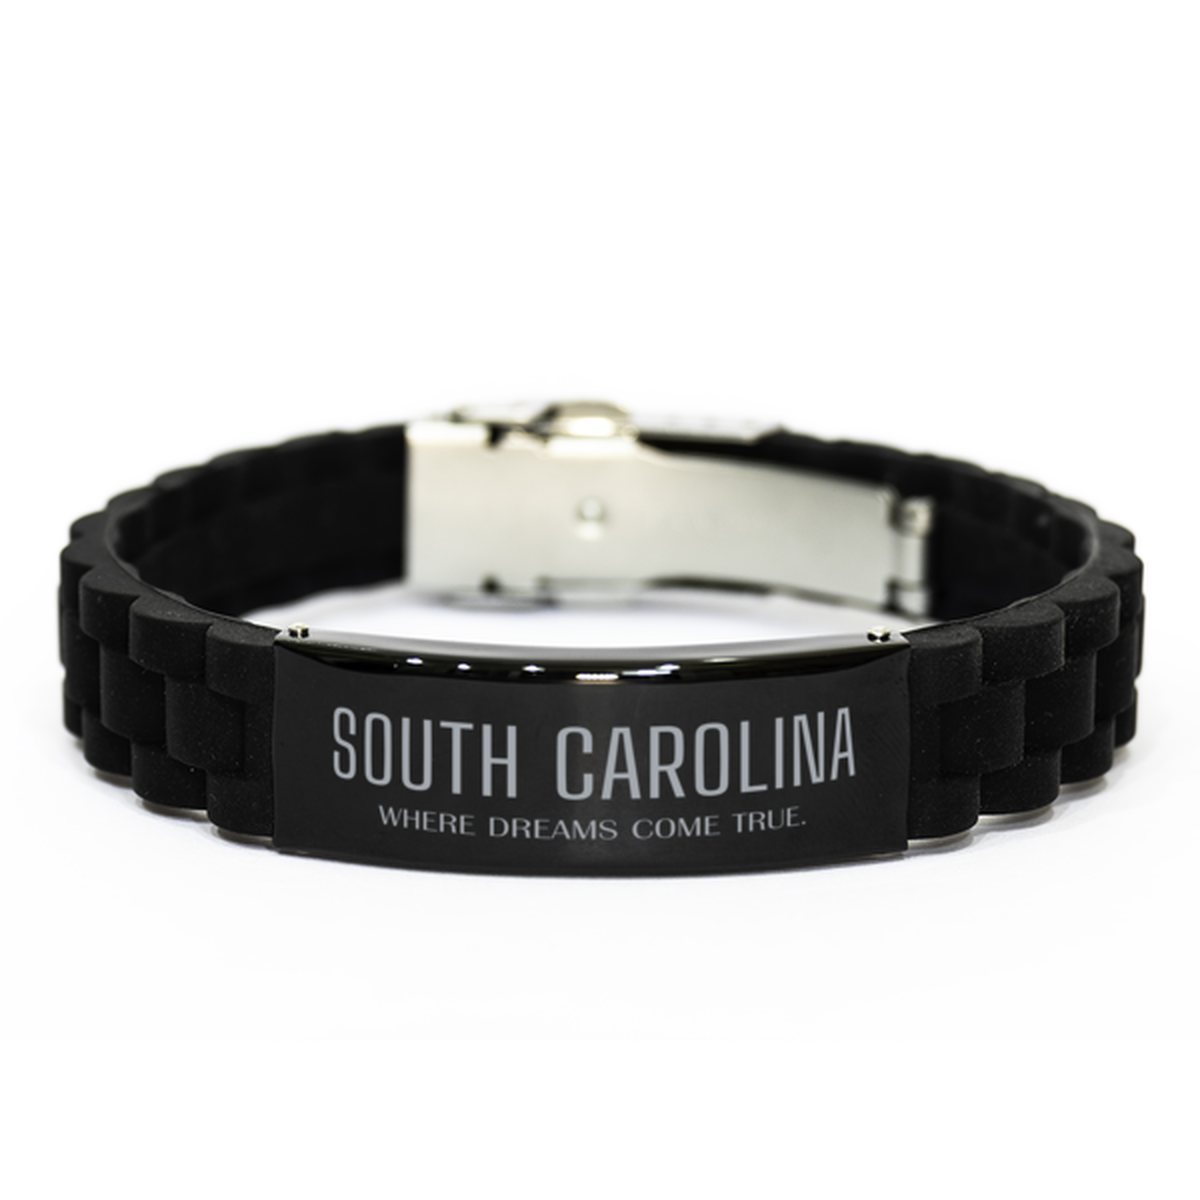 Love South Carolina State Black Glidelock Clasp Bracelet, South Carolina Where dreams come true, Birthday Inspirational Gifts For South Carolina Men, Women, Friends